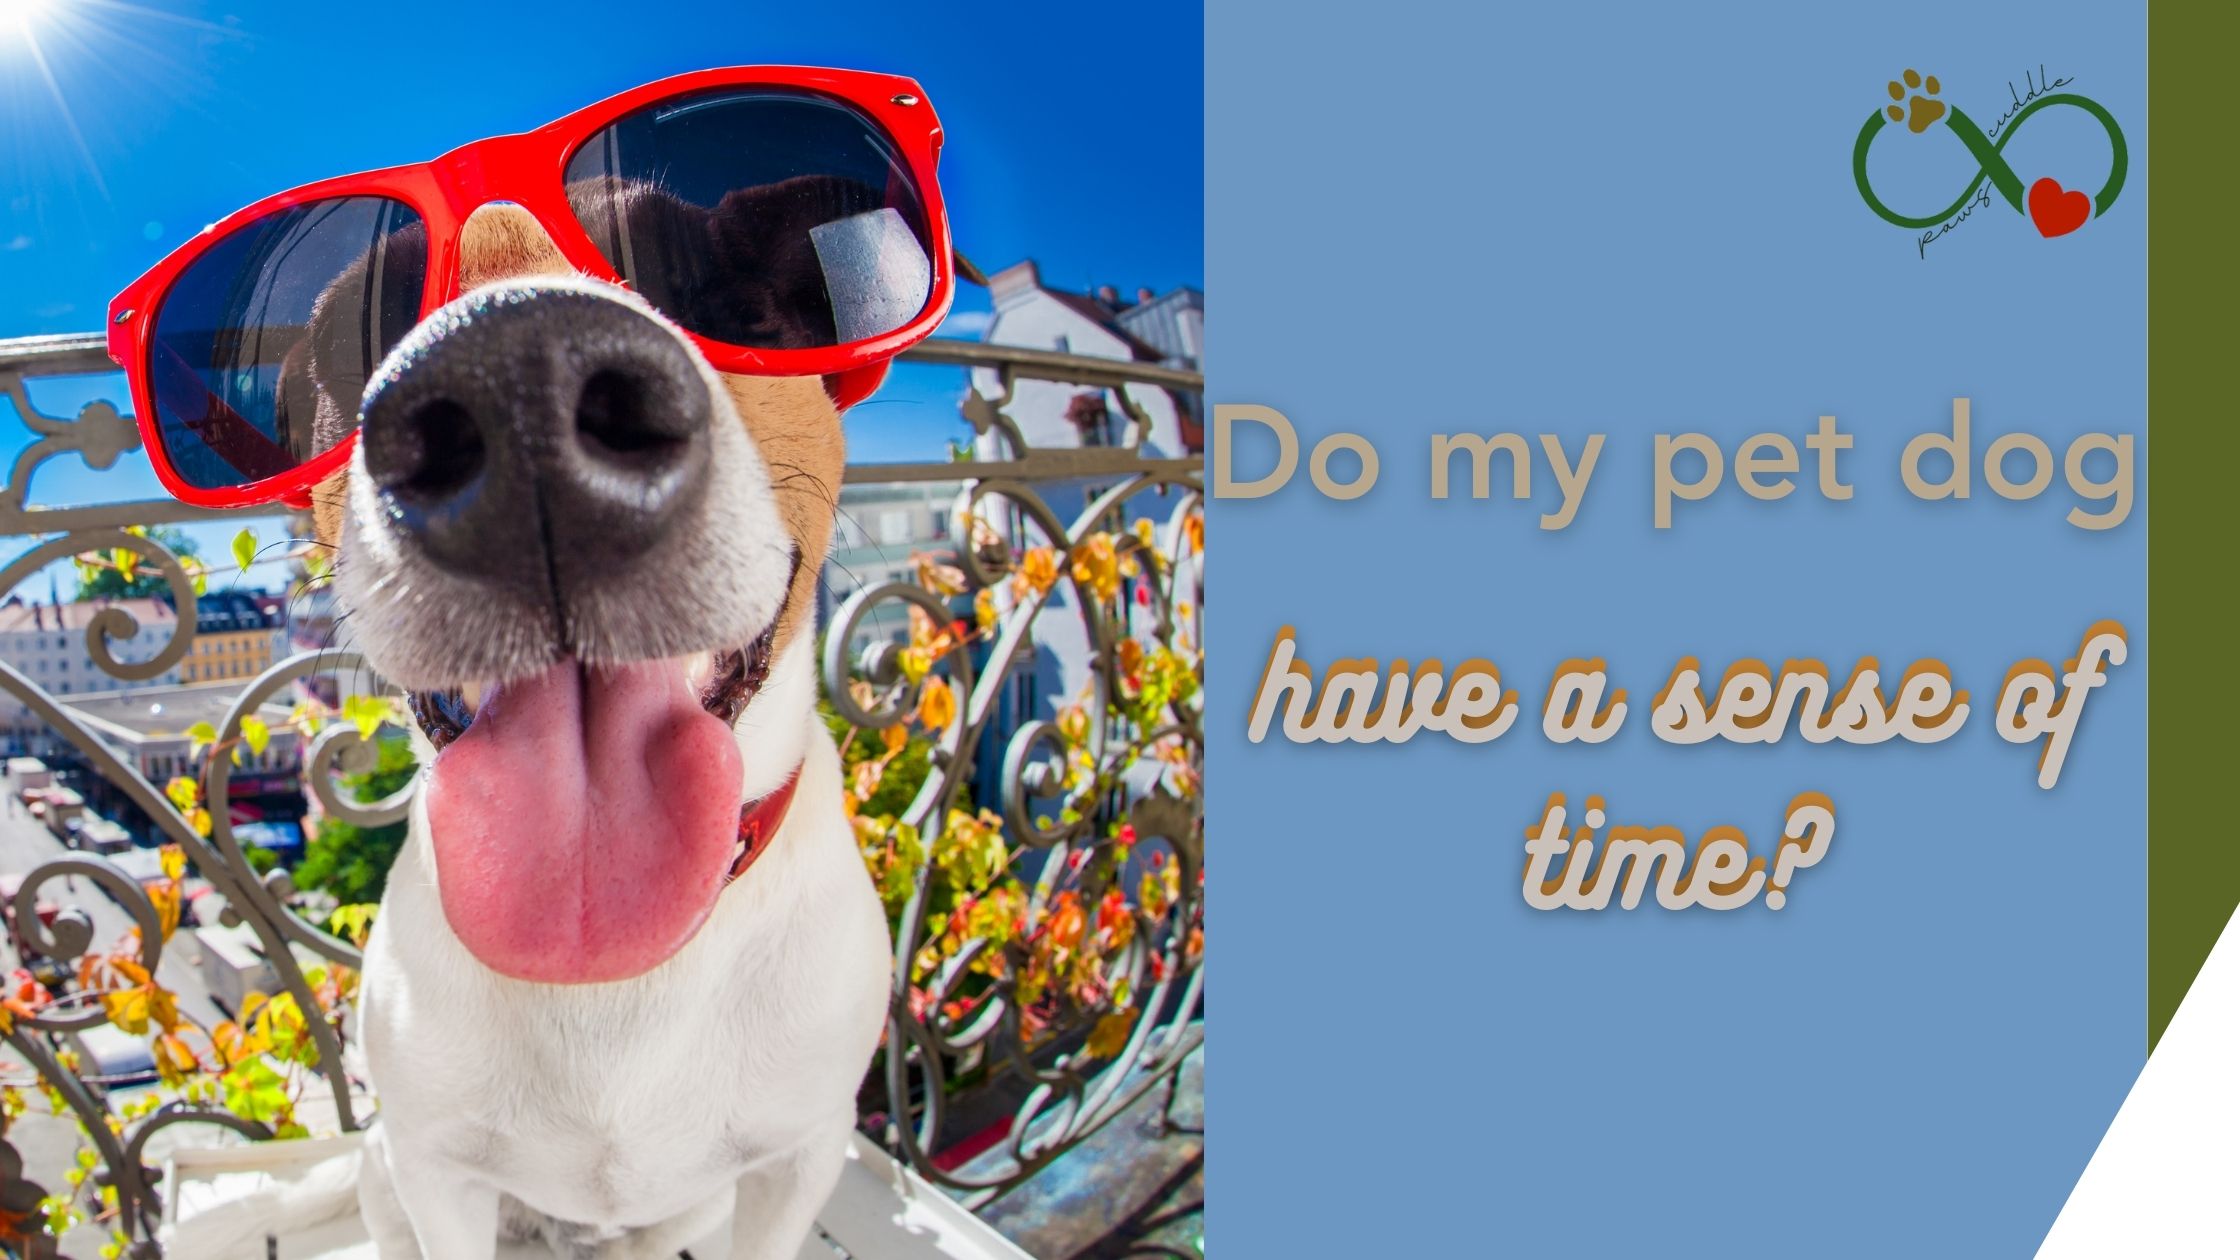 Do my pet dog have a sense of time?